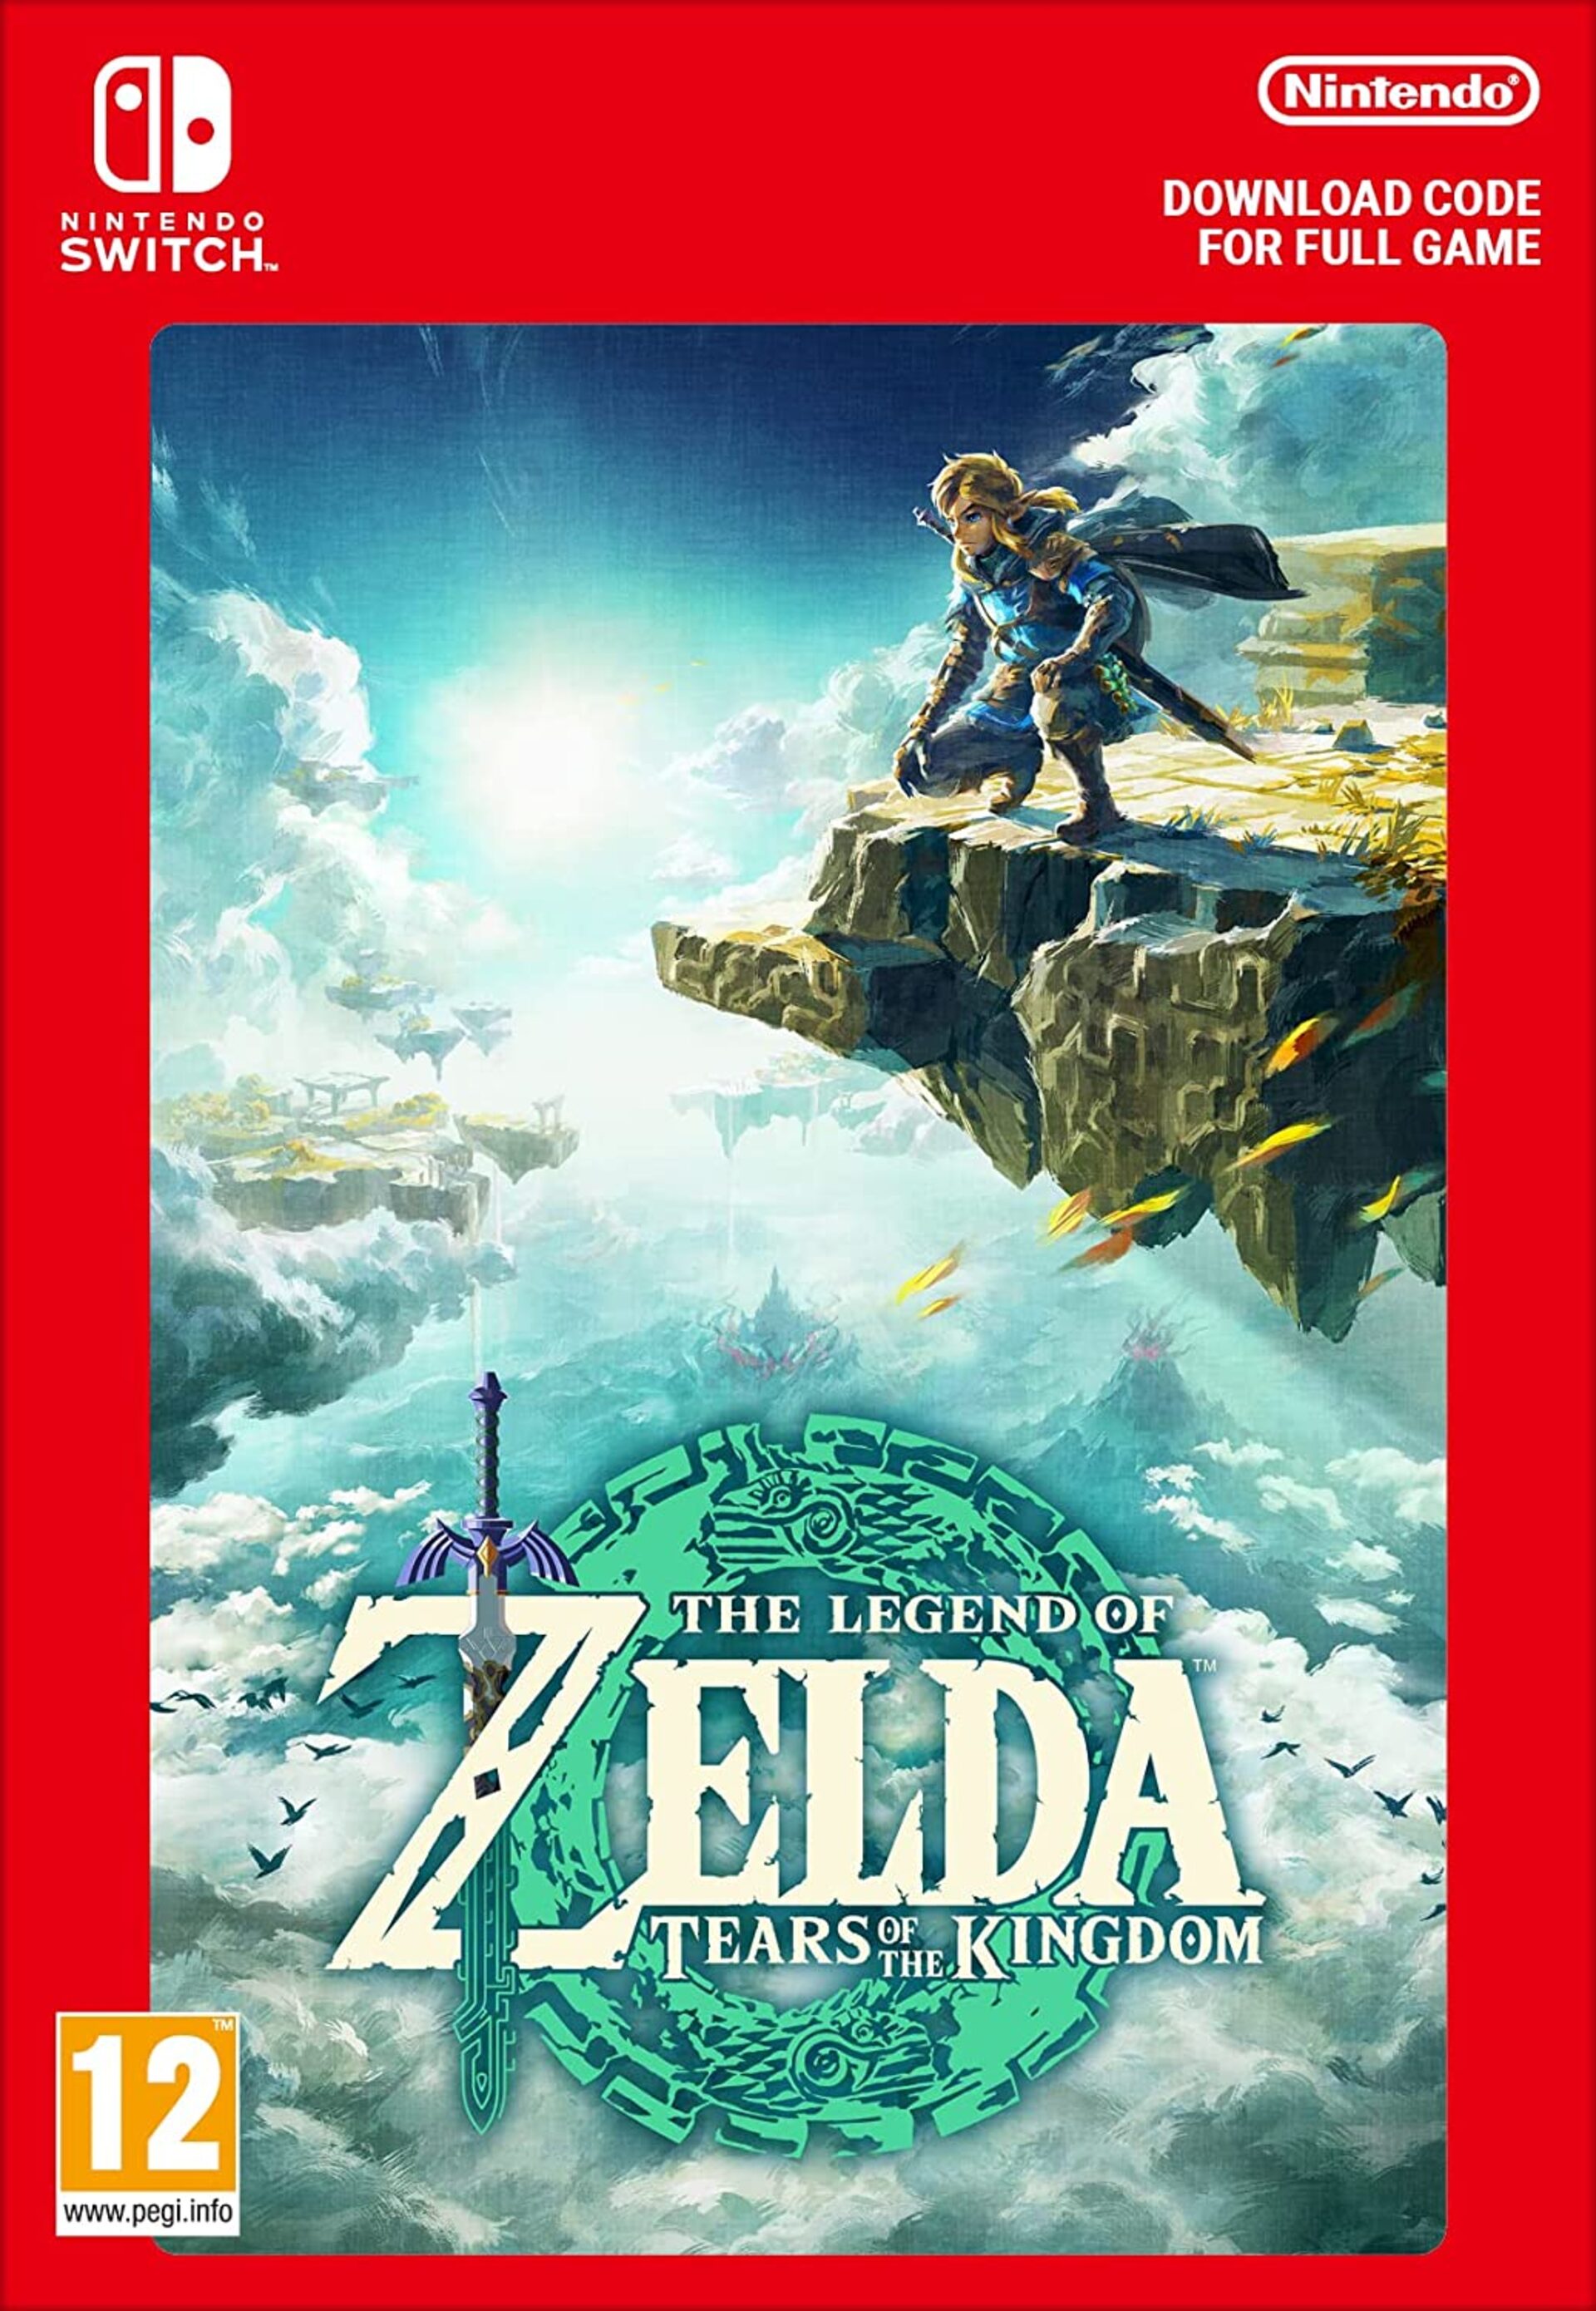 Buy The Legend of Zelda™: ENEBA price of Tears Nintendo Cheap Kingdom the | key